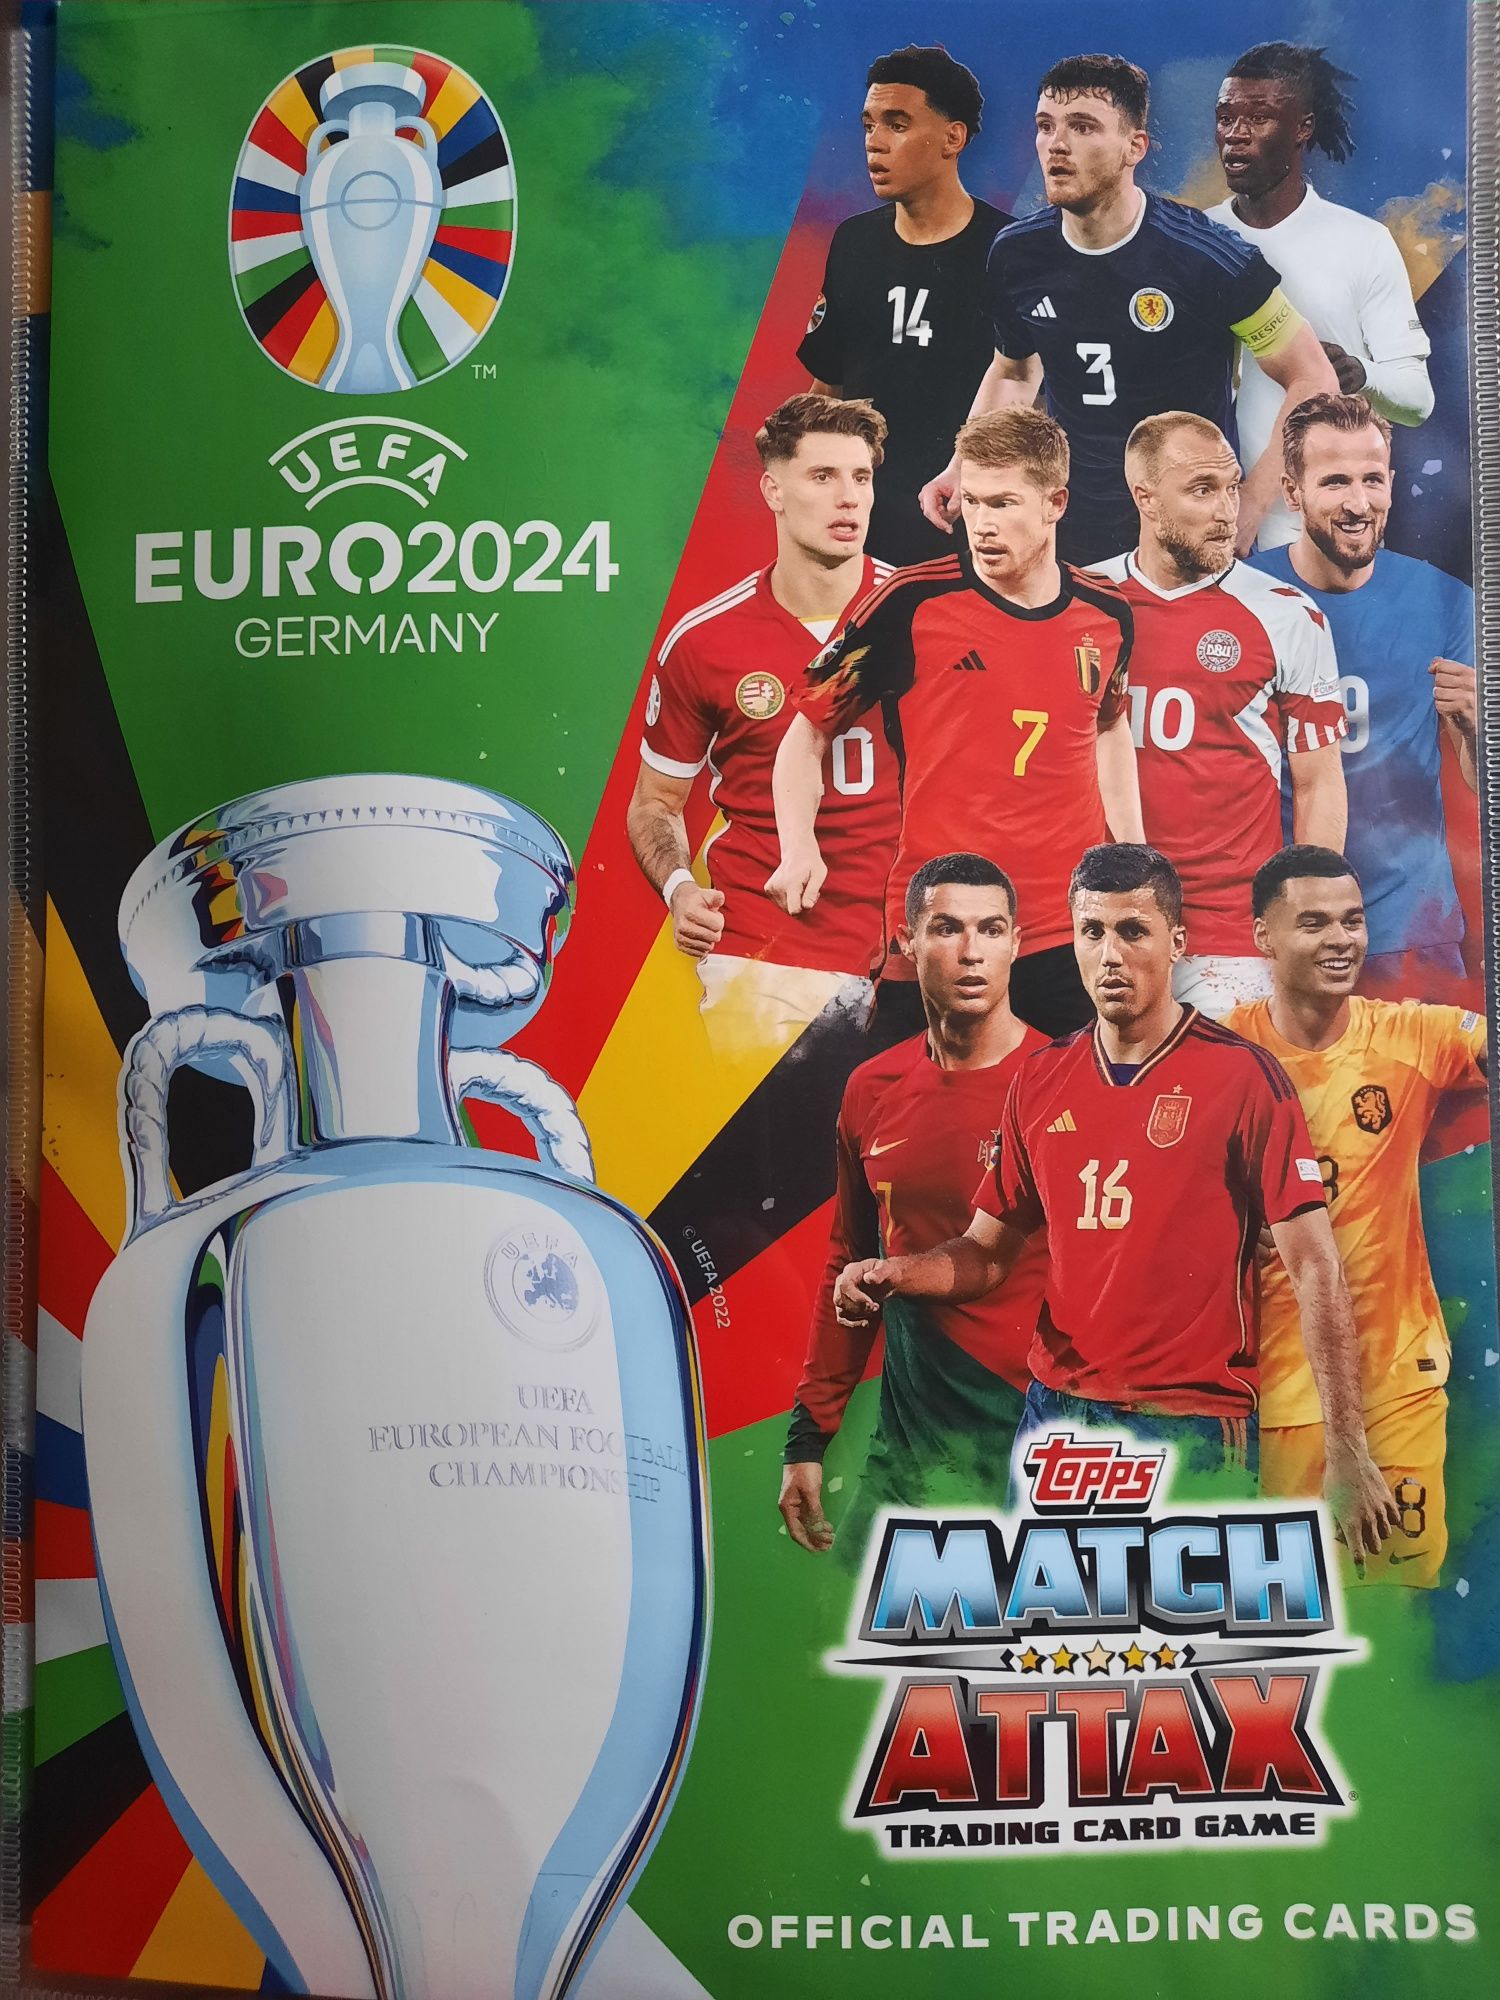 Match Attex Euro 2024